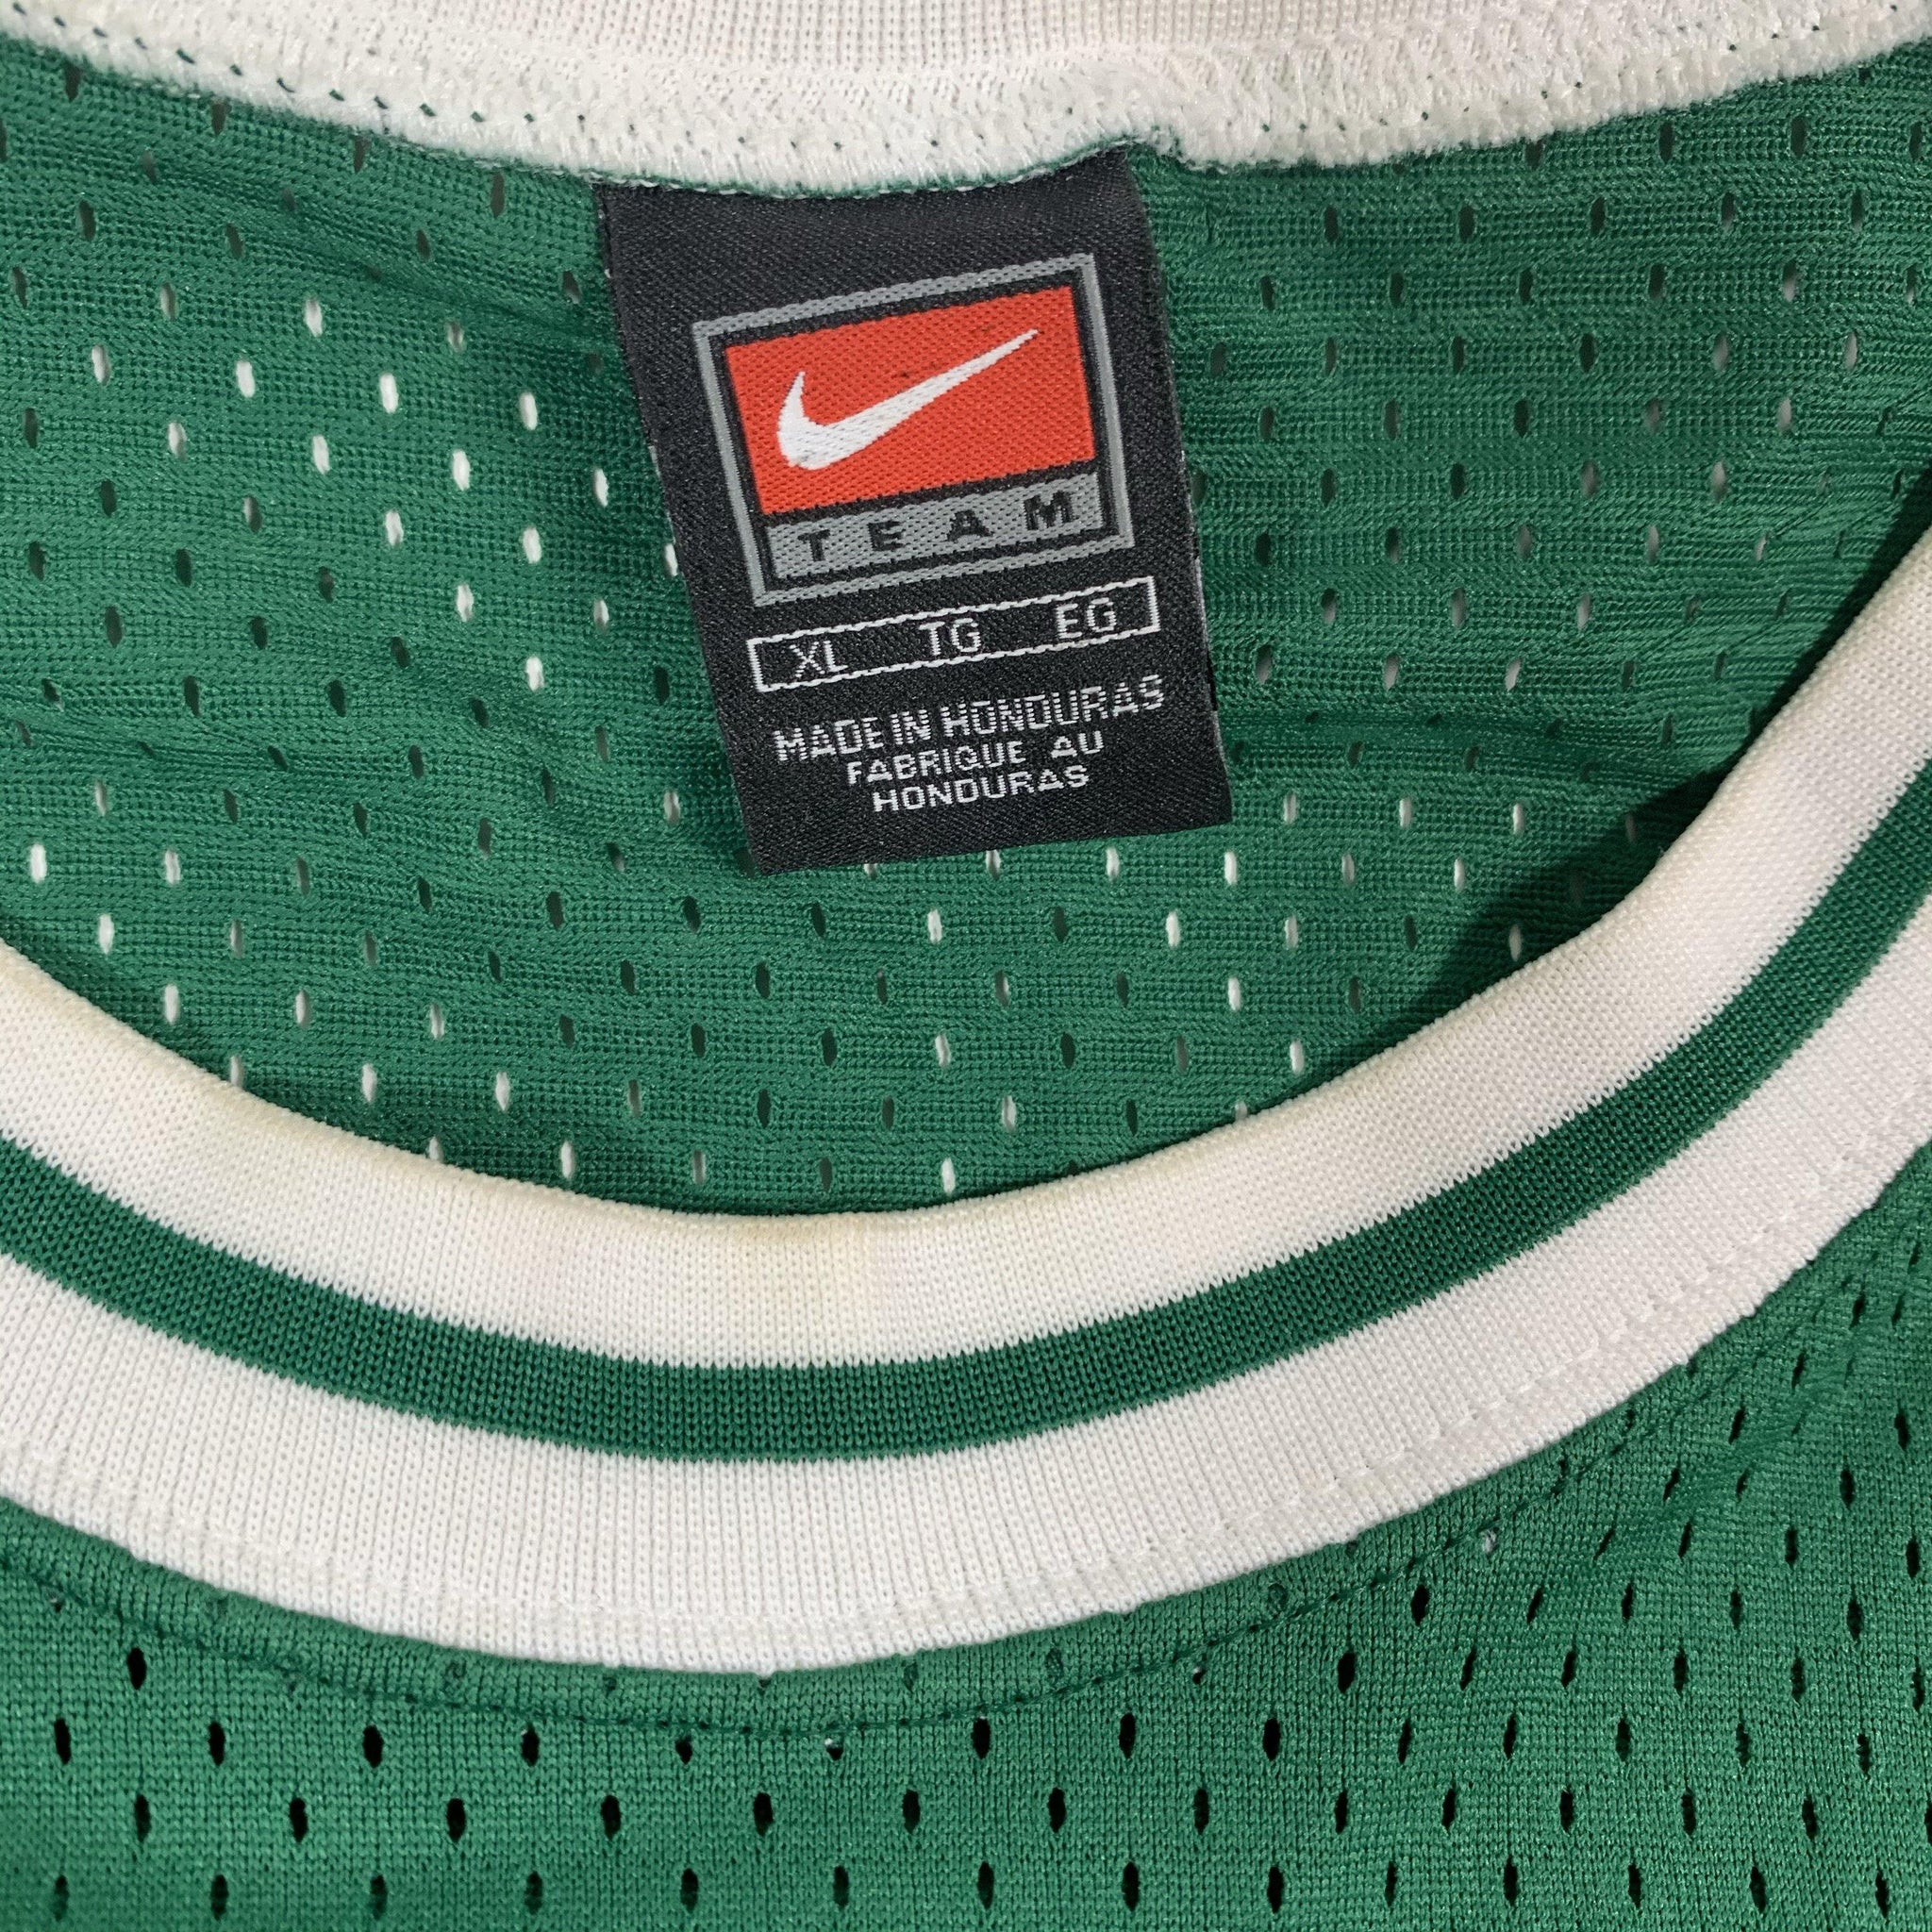 Vintage Nike Paul Pierce “Boston Celtics” Basketball Jersey